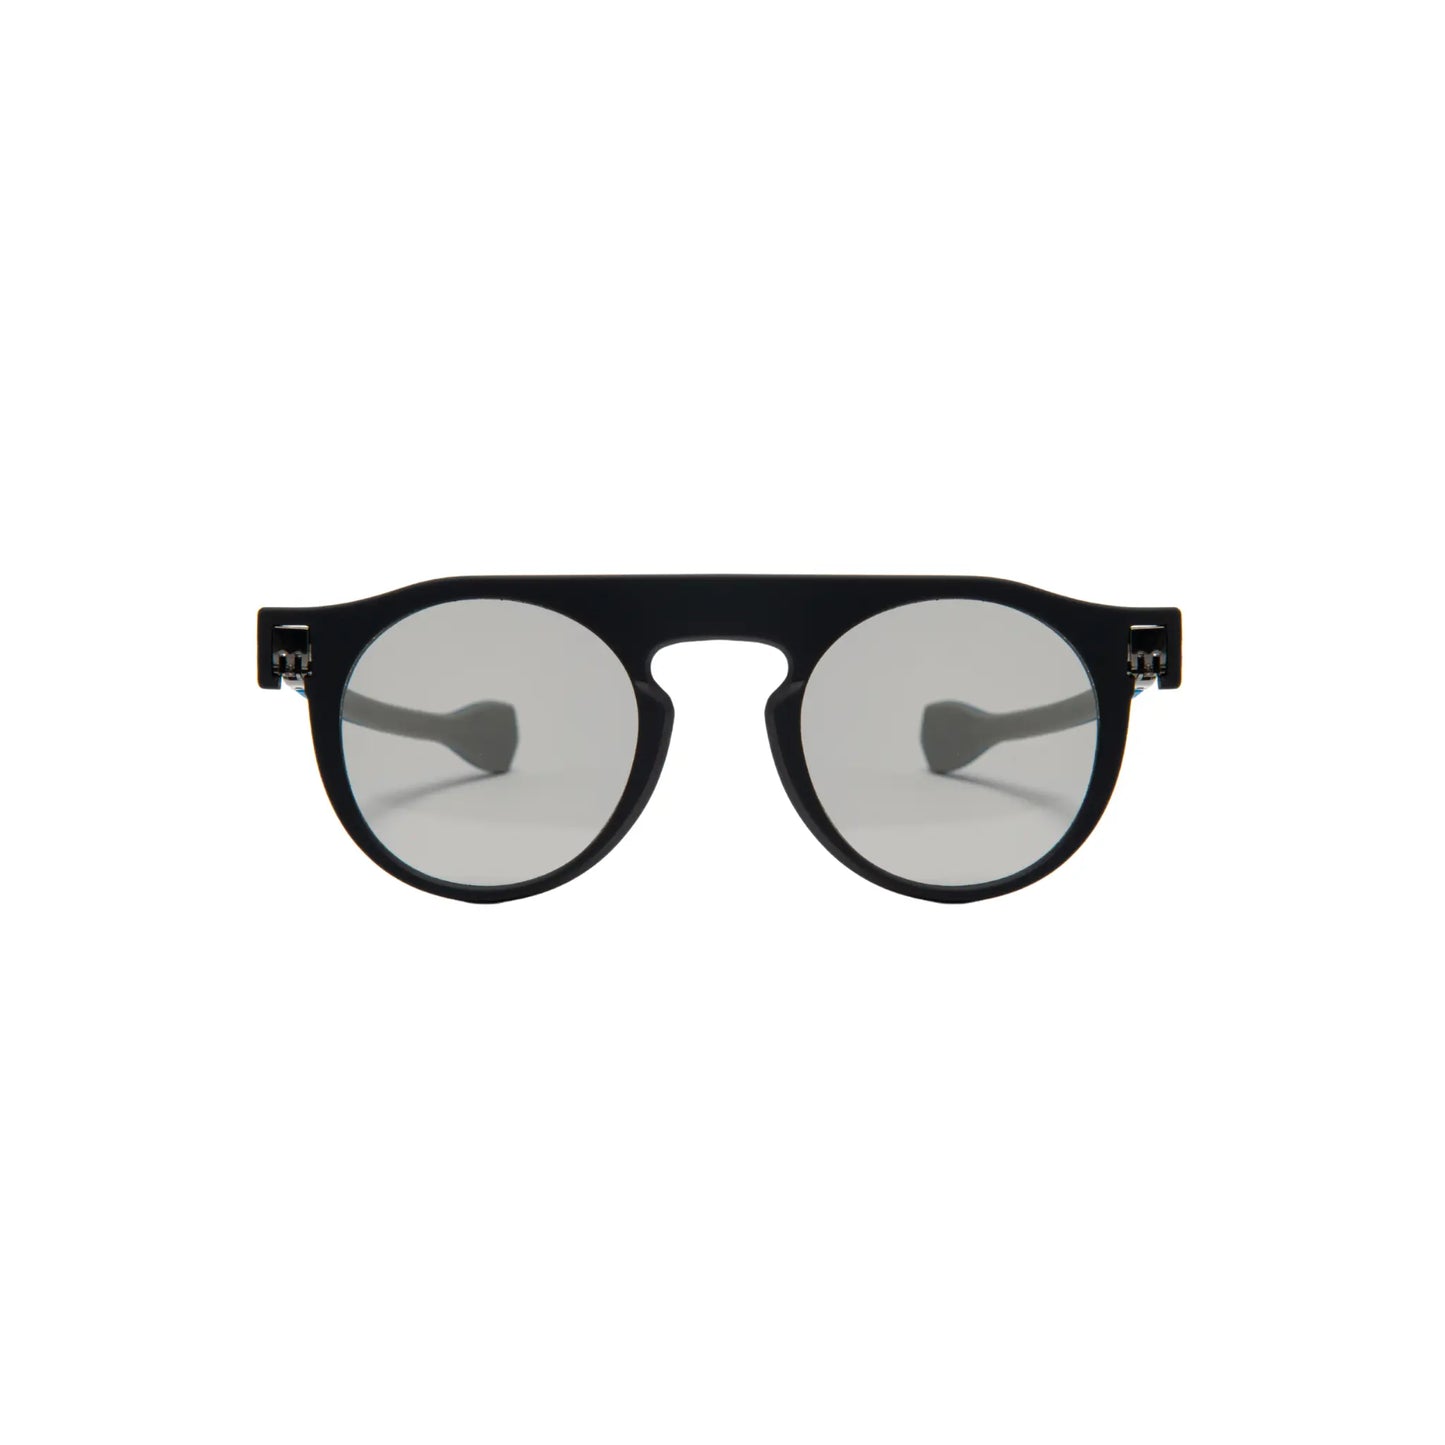 Reverso sunglasses black/grey & blue reversible & ultra light front view 2